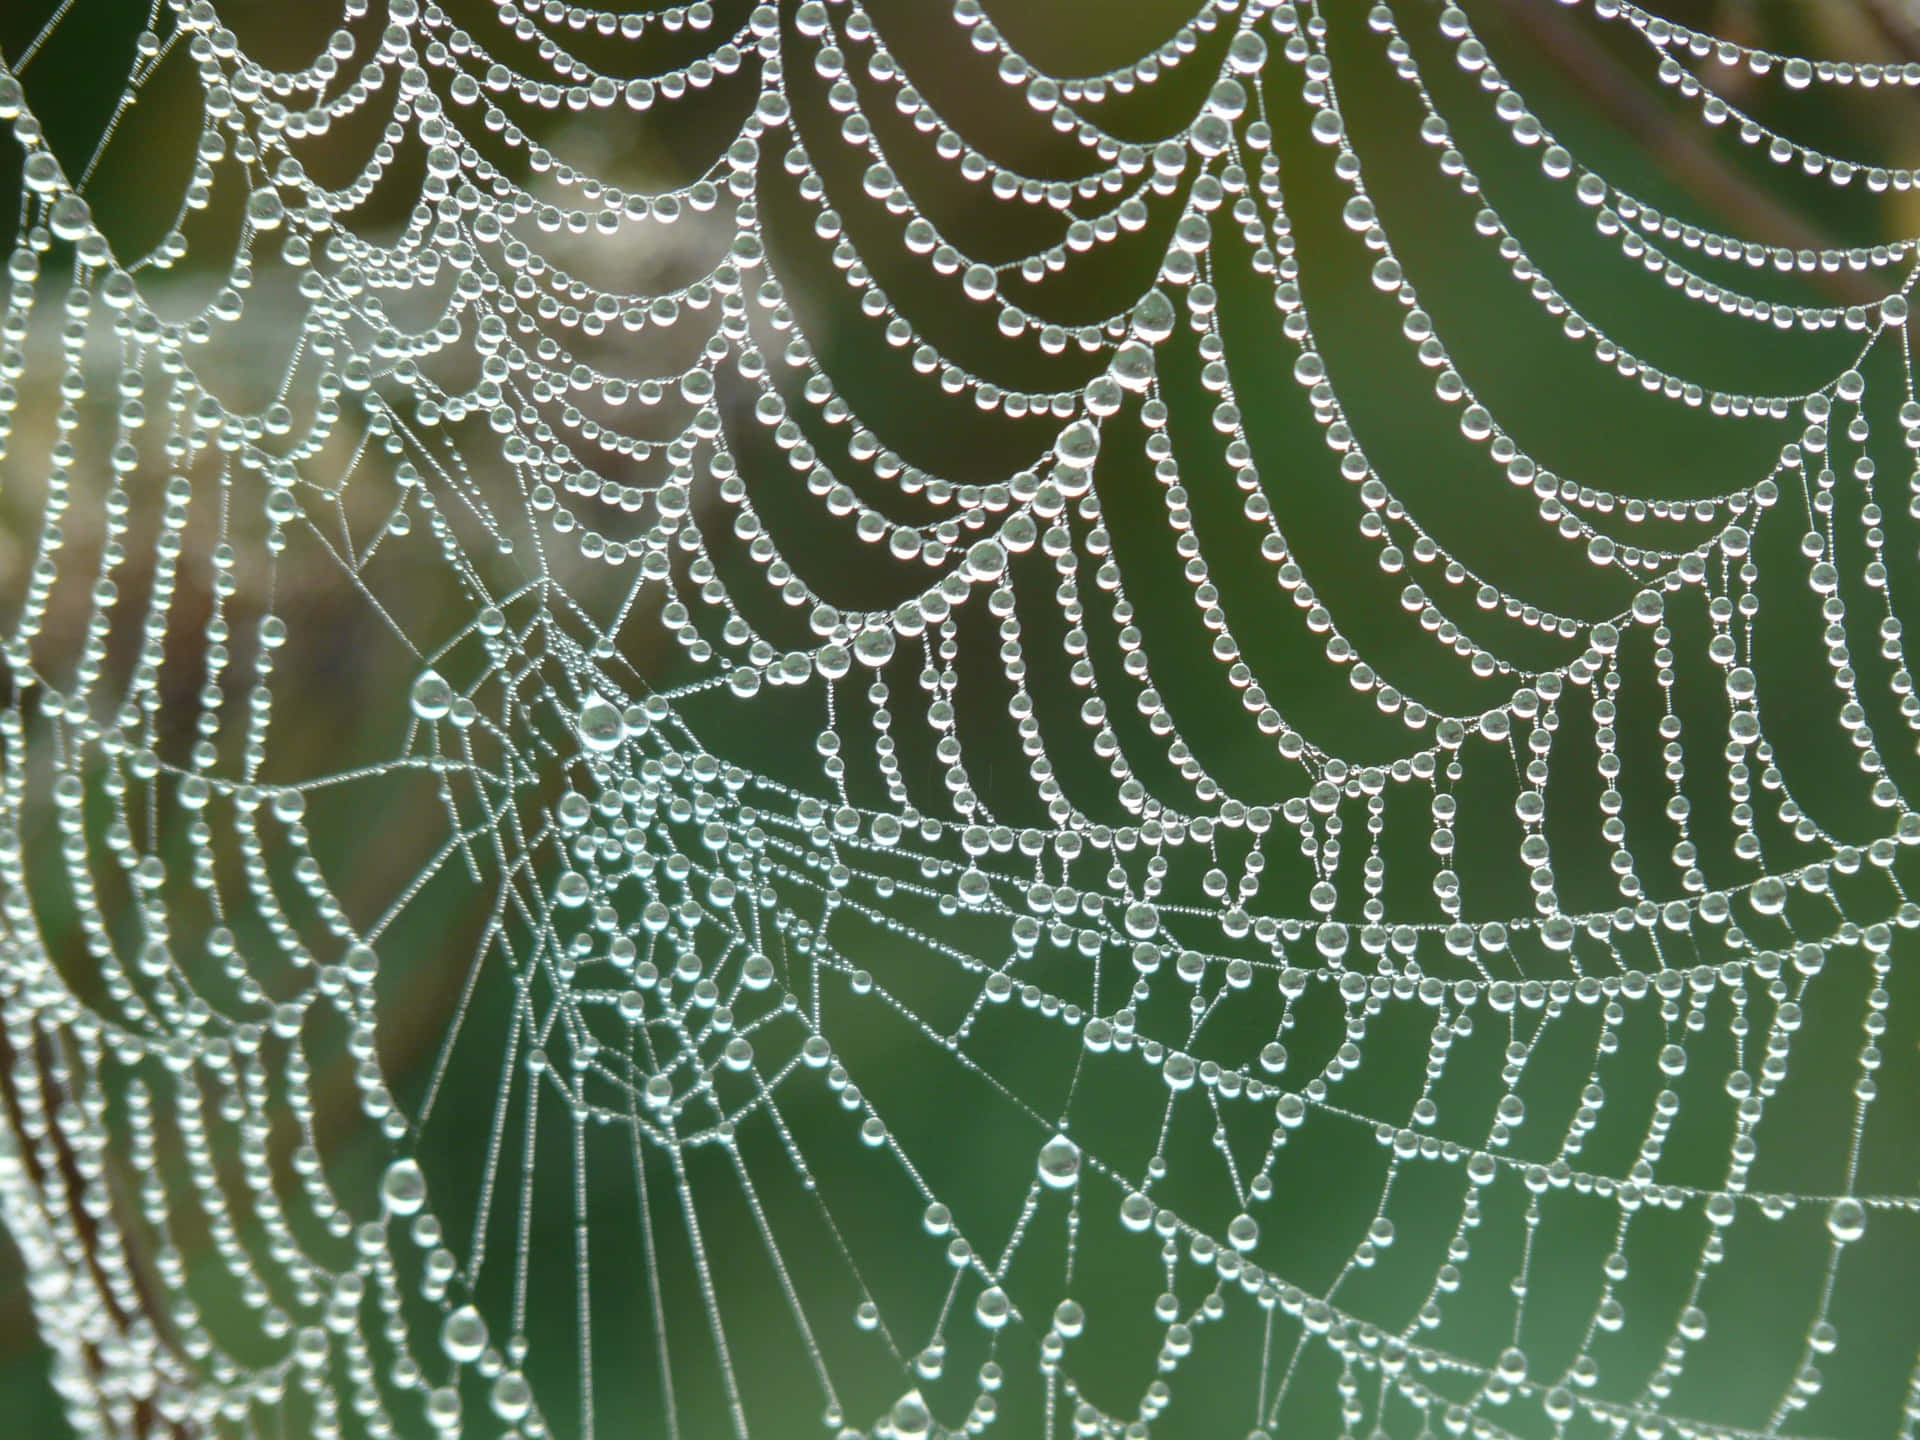 Cobwebs on an Autumn Day Wallpaper